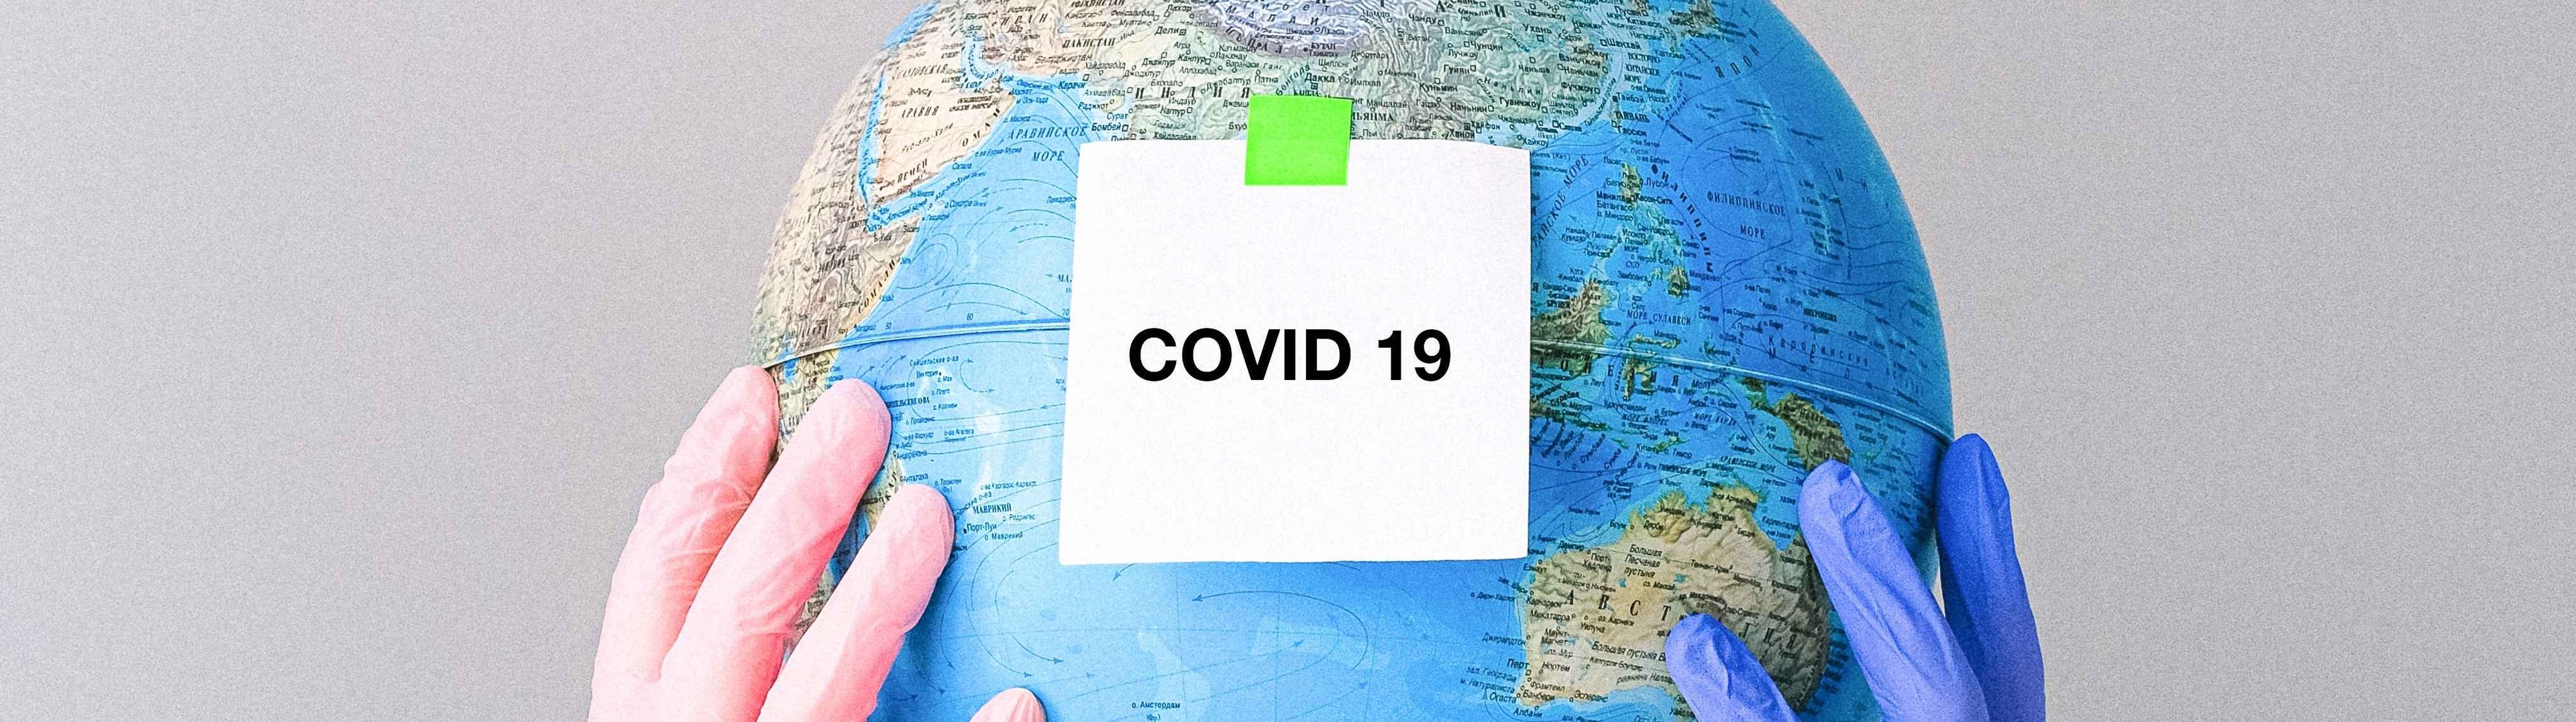 Se supera el millón de muertes por Covid-19 a nivel global